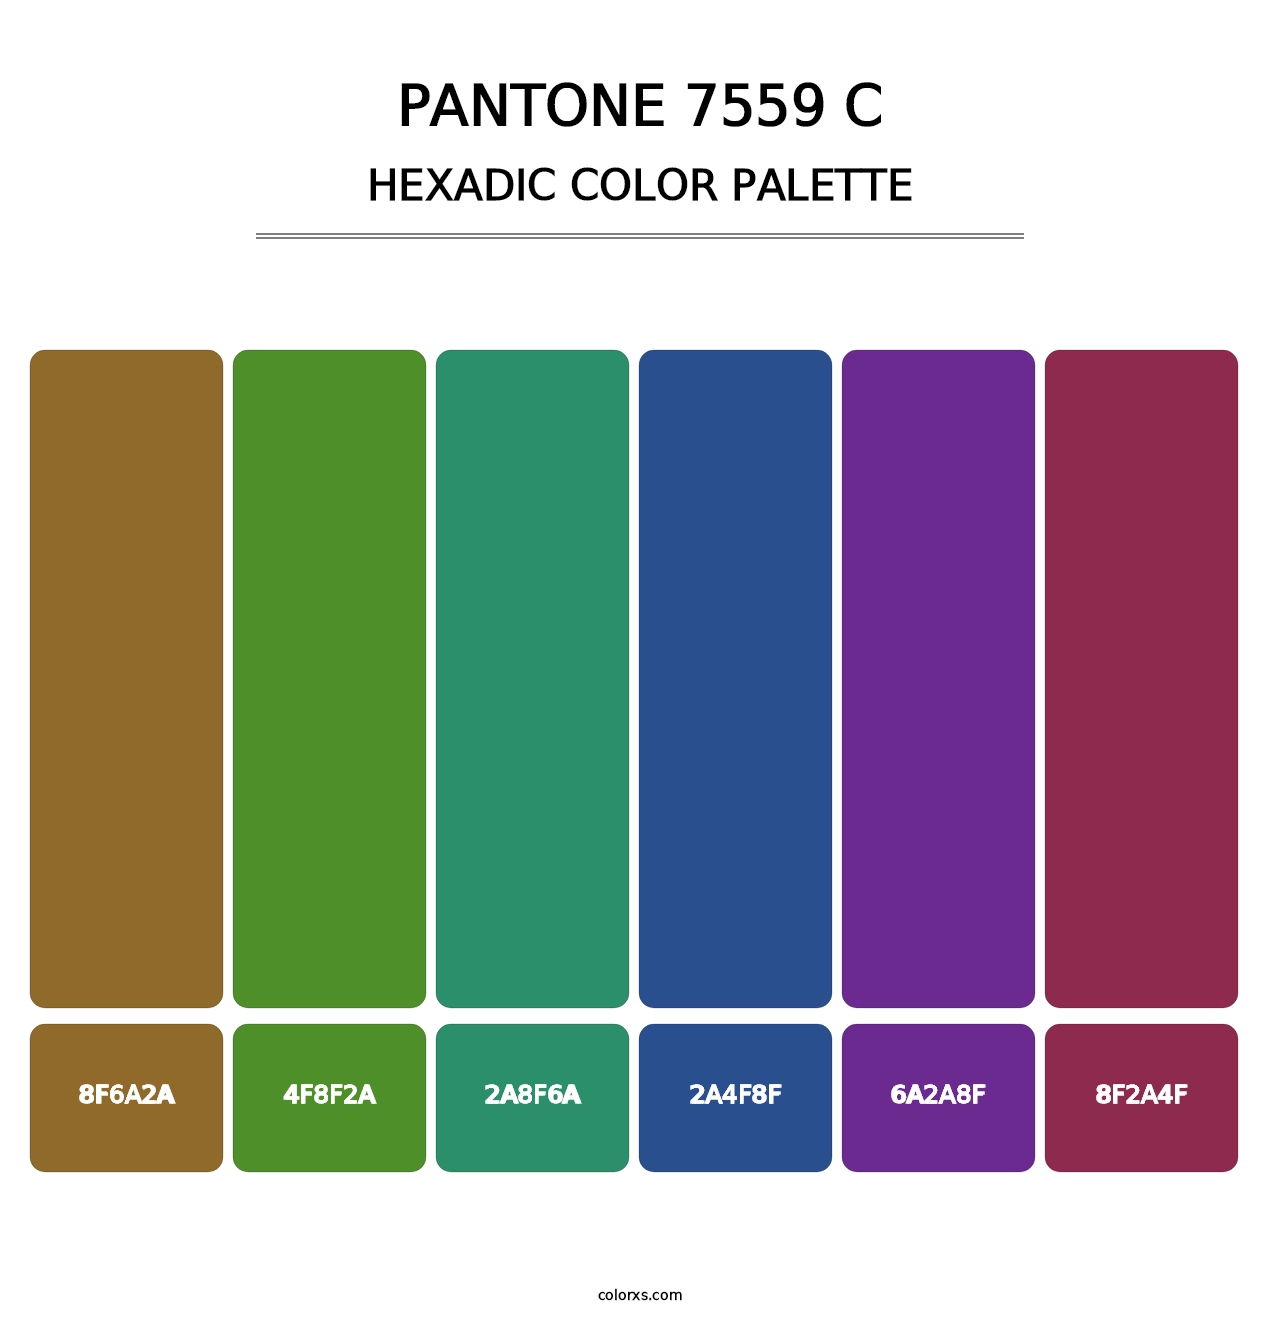 PANTONE 7559 C - Hexadic Color Palette